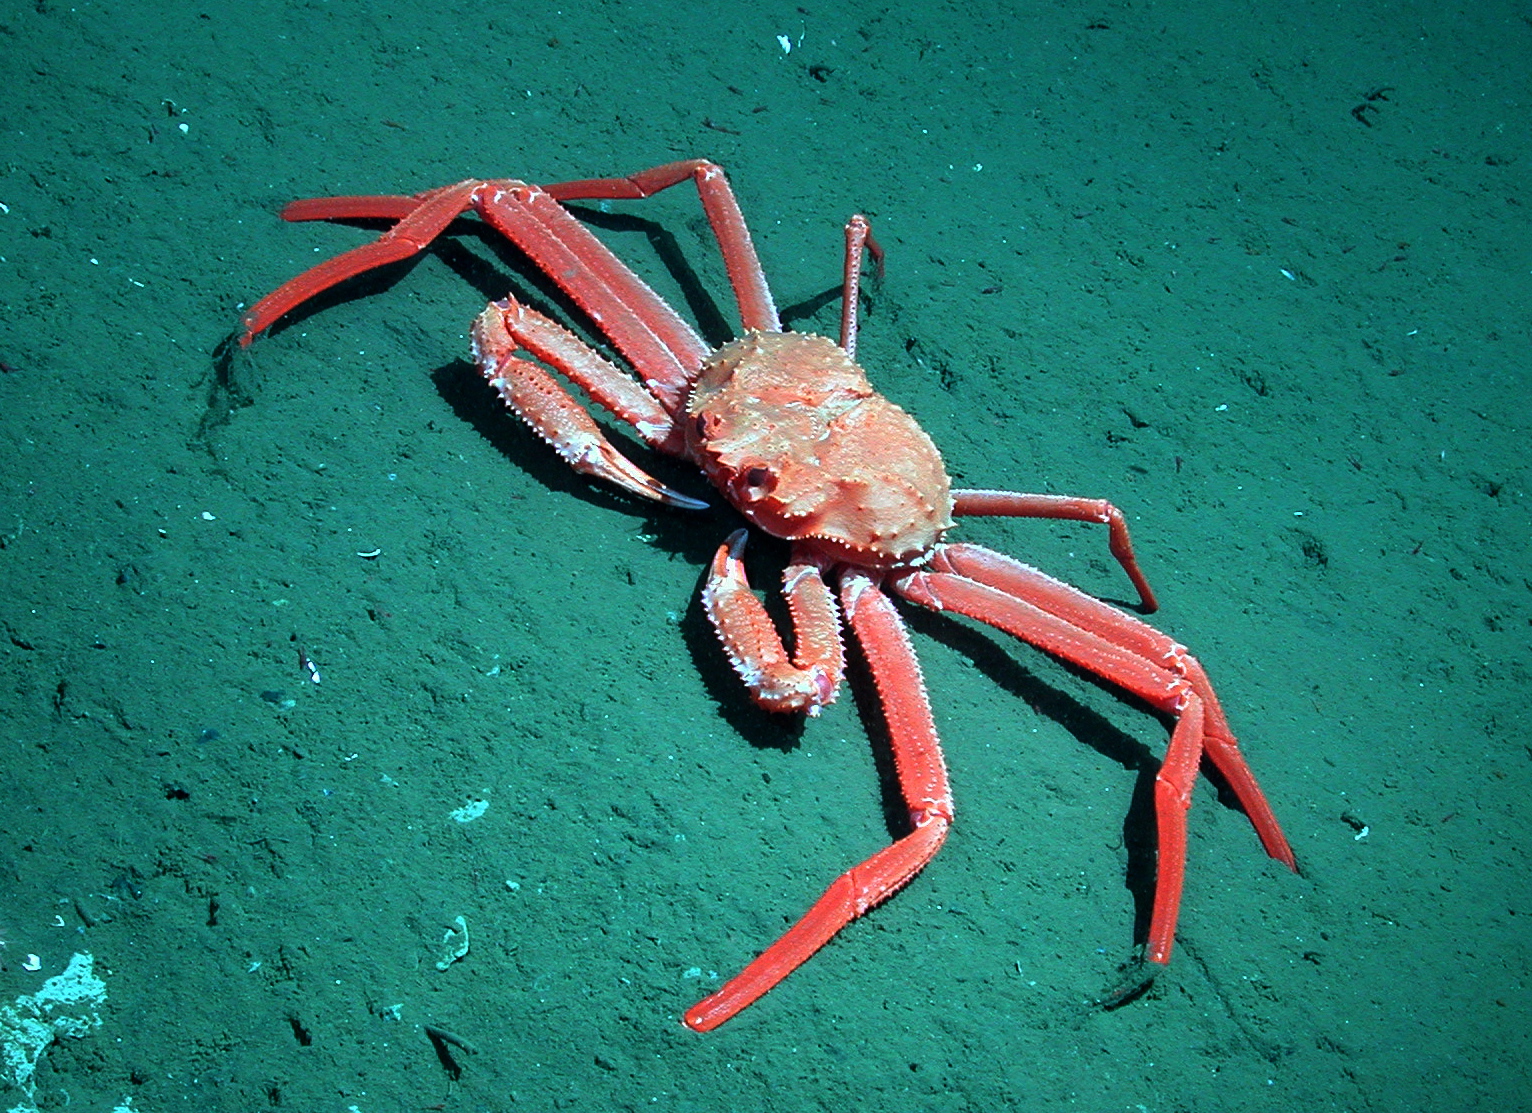 Ocean Acidification Making Sense of Crabs and Skeptics